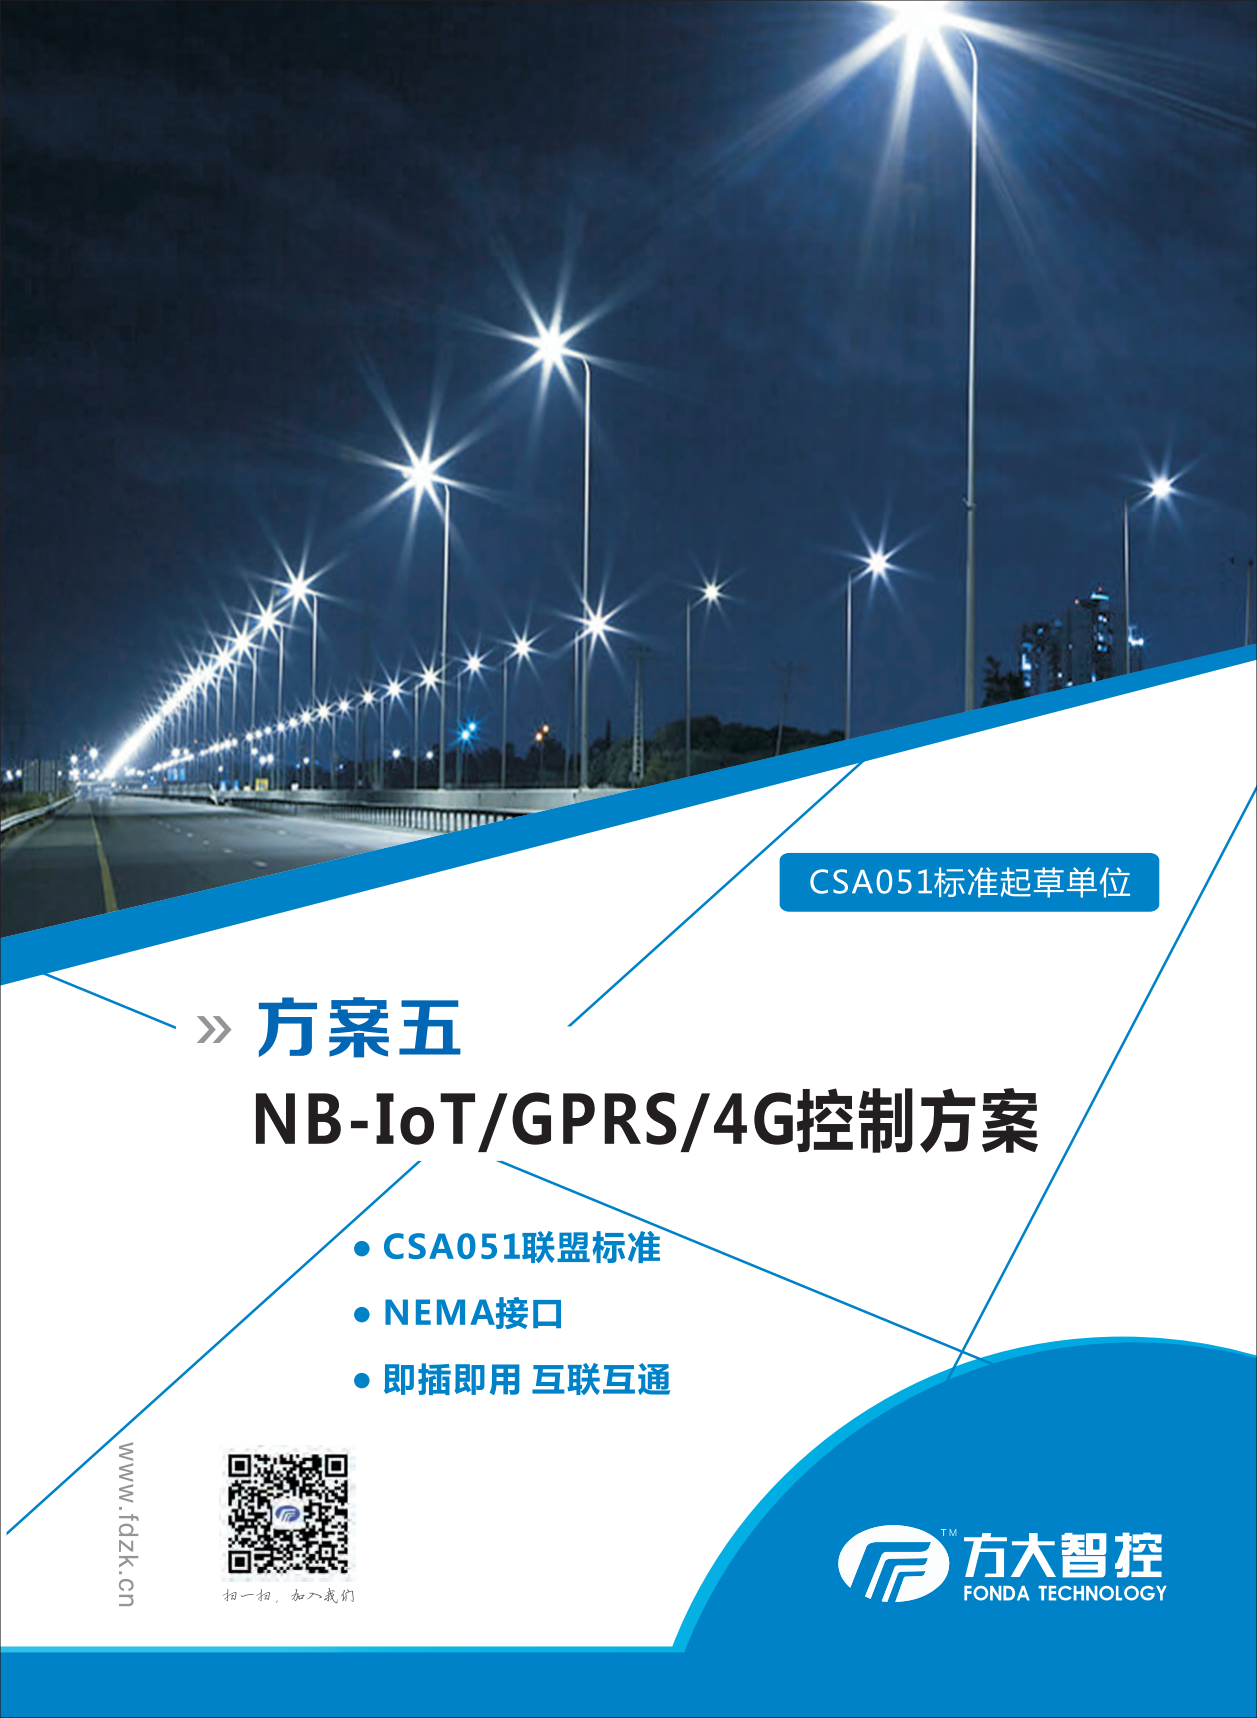 NB-IoT/GPRS/4G 解决方案图片